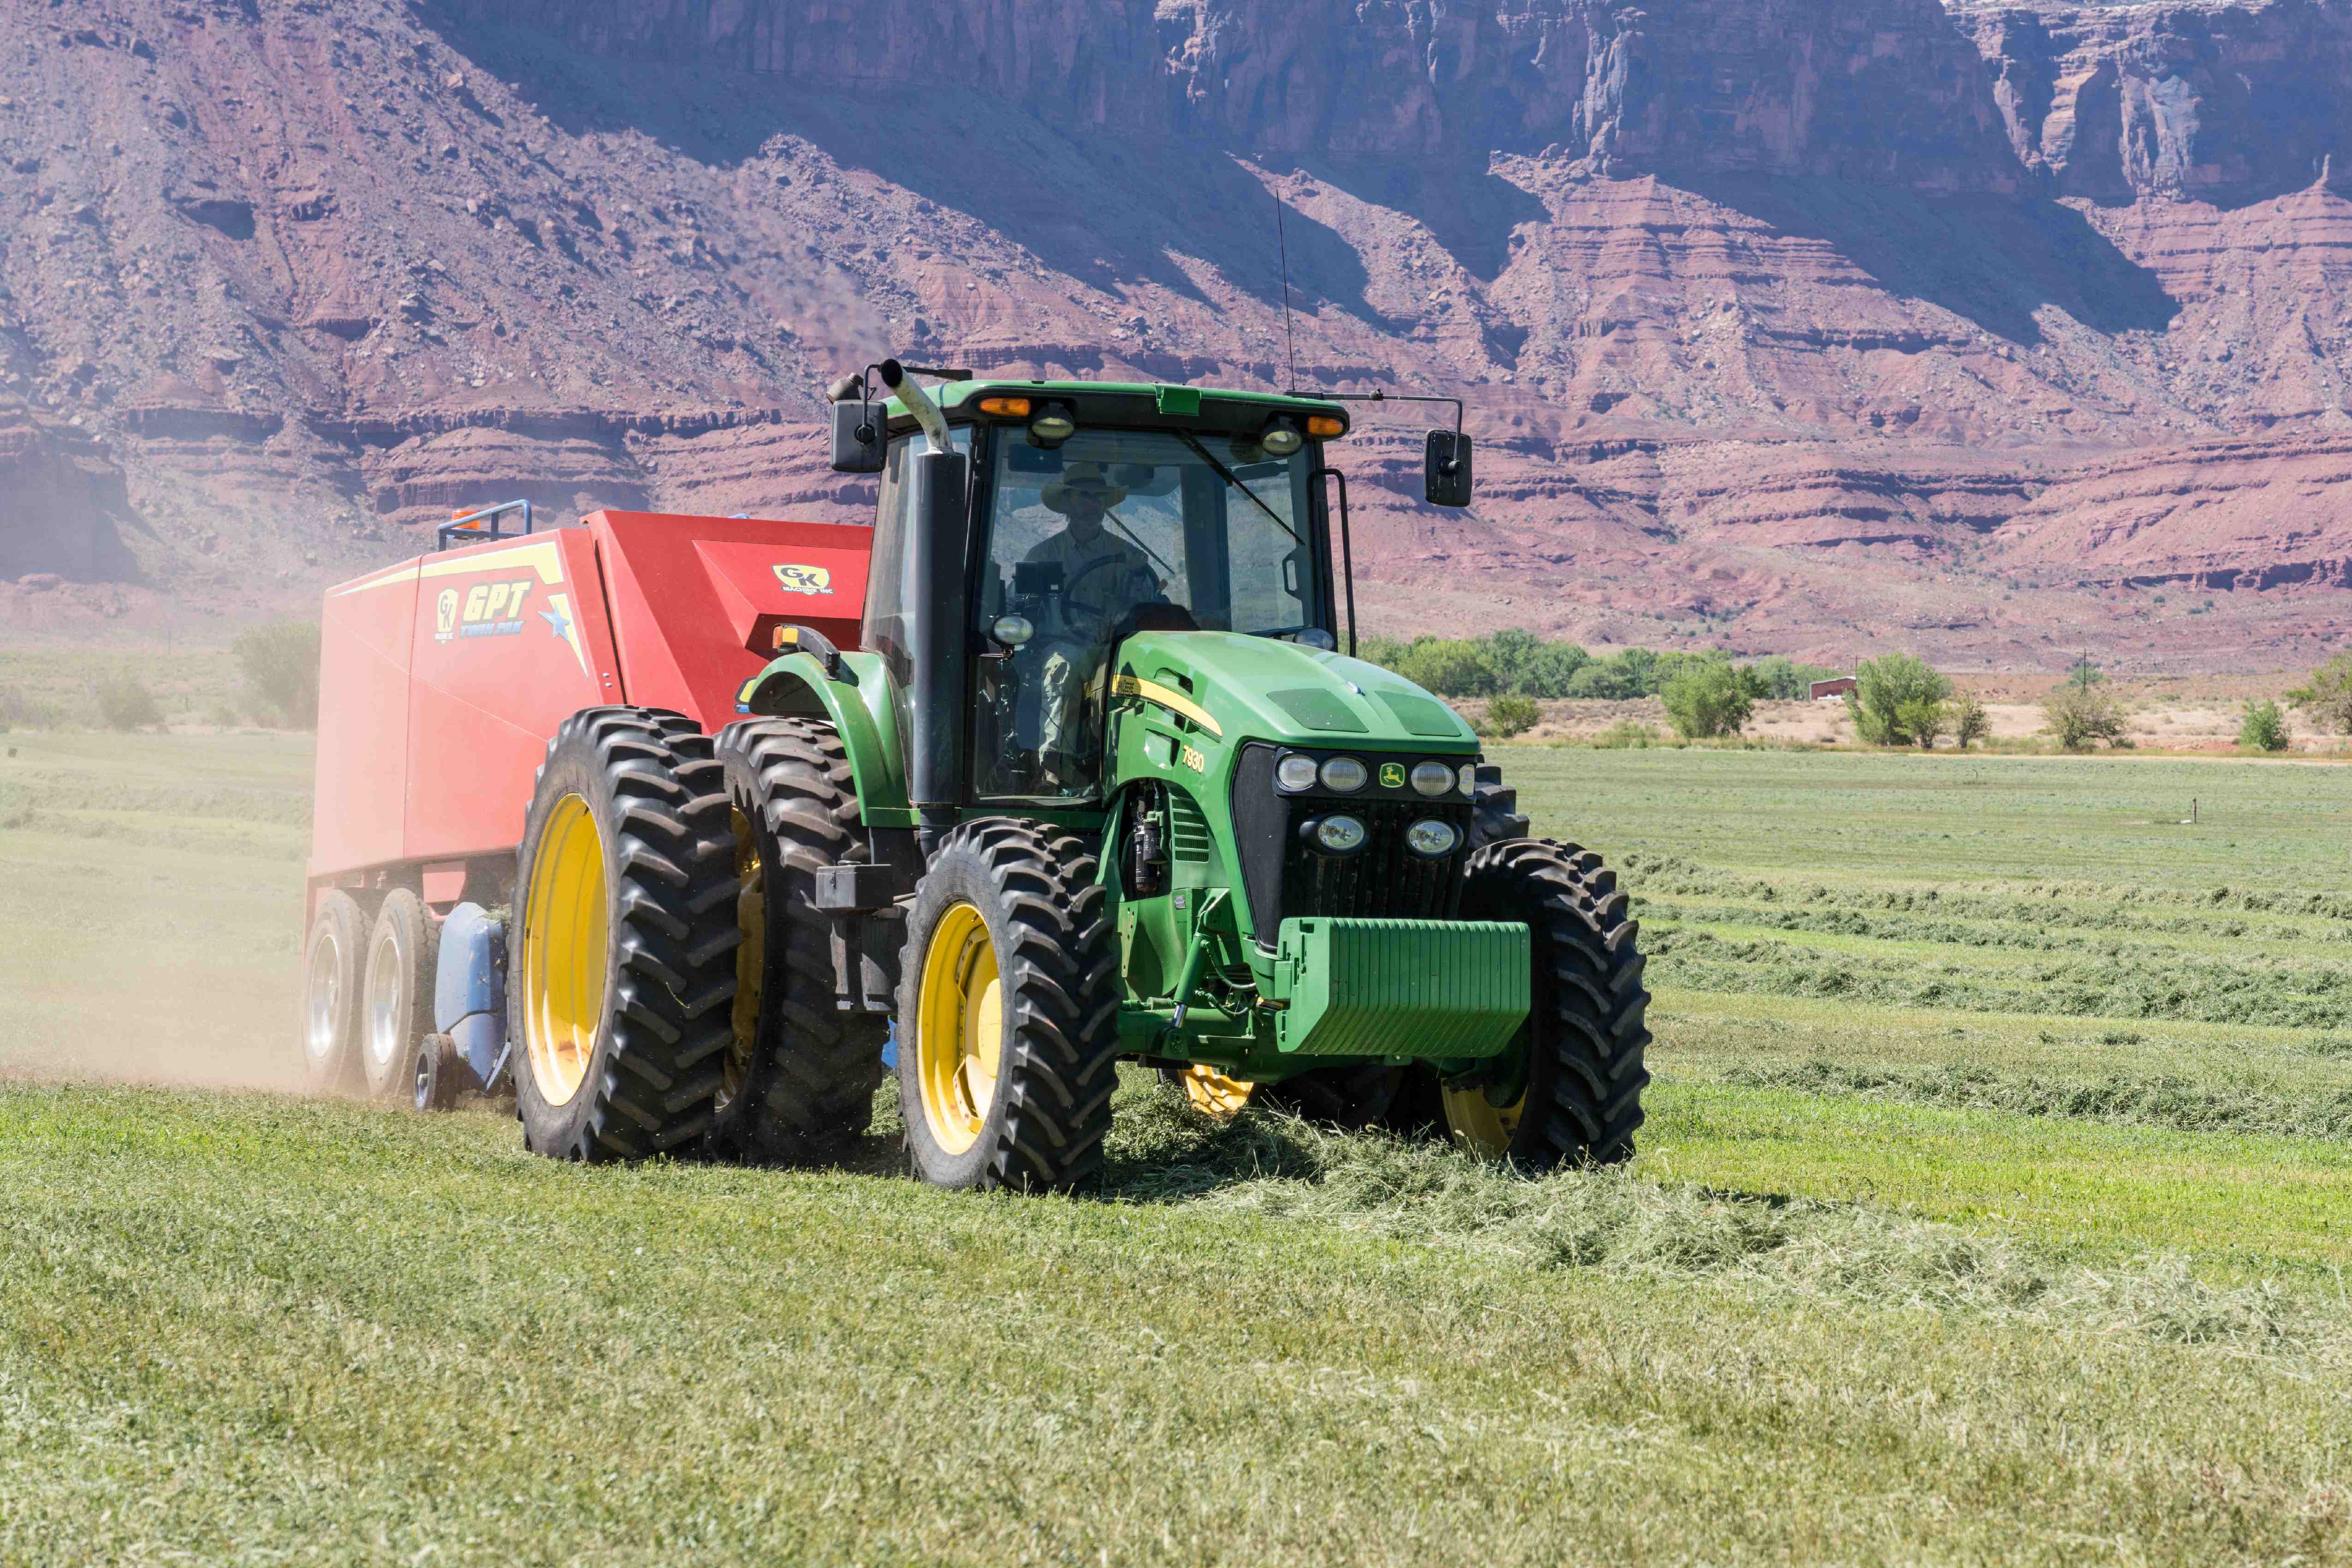 John Deere will let American farmers repair their own equipment